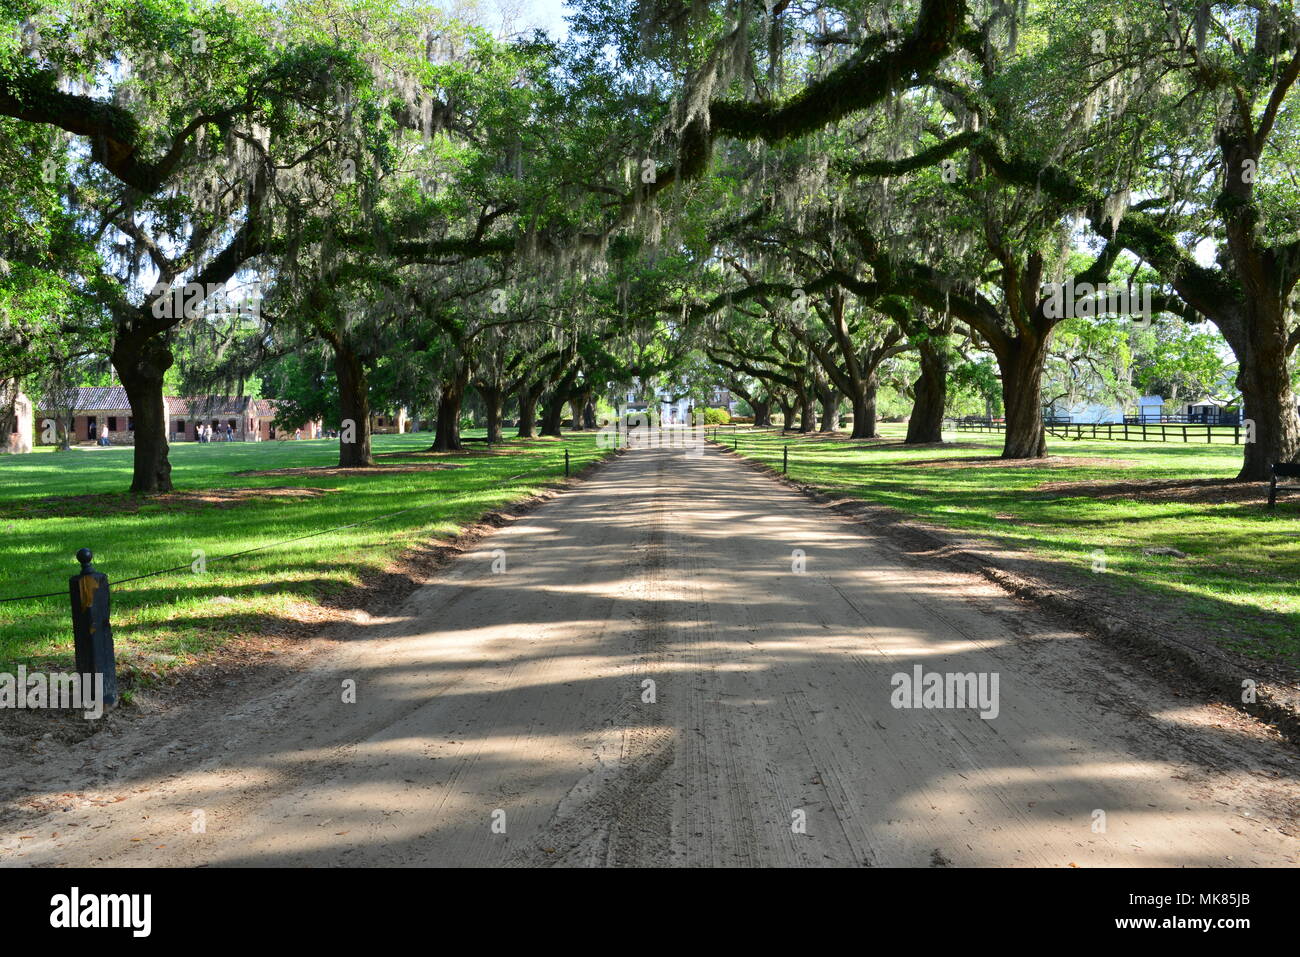 Avenue of Oaks at Boone Hall in South Carolina Stock Photo - Alamy